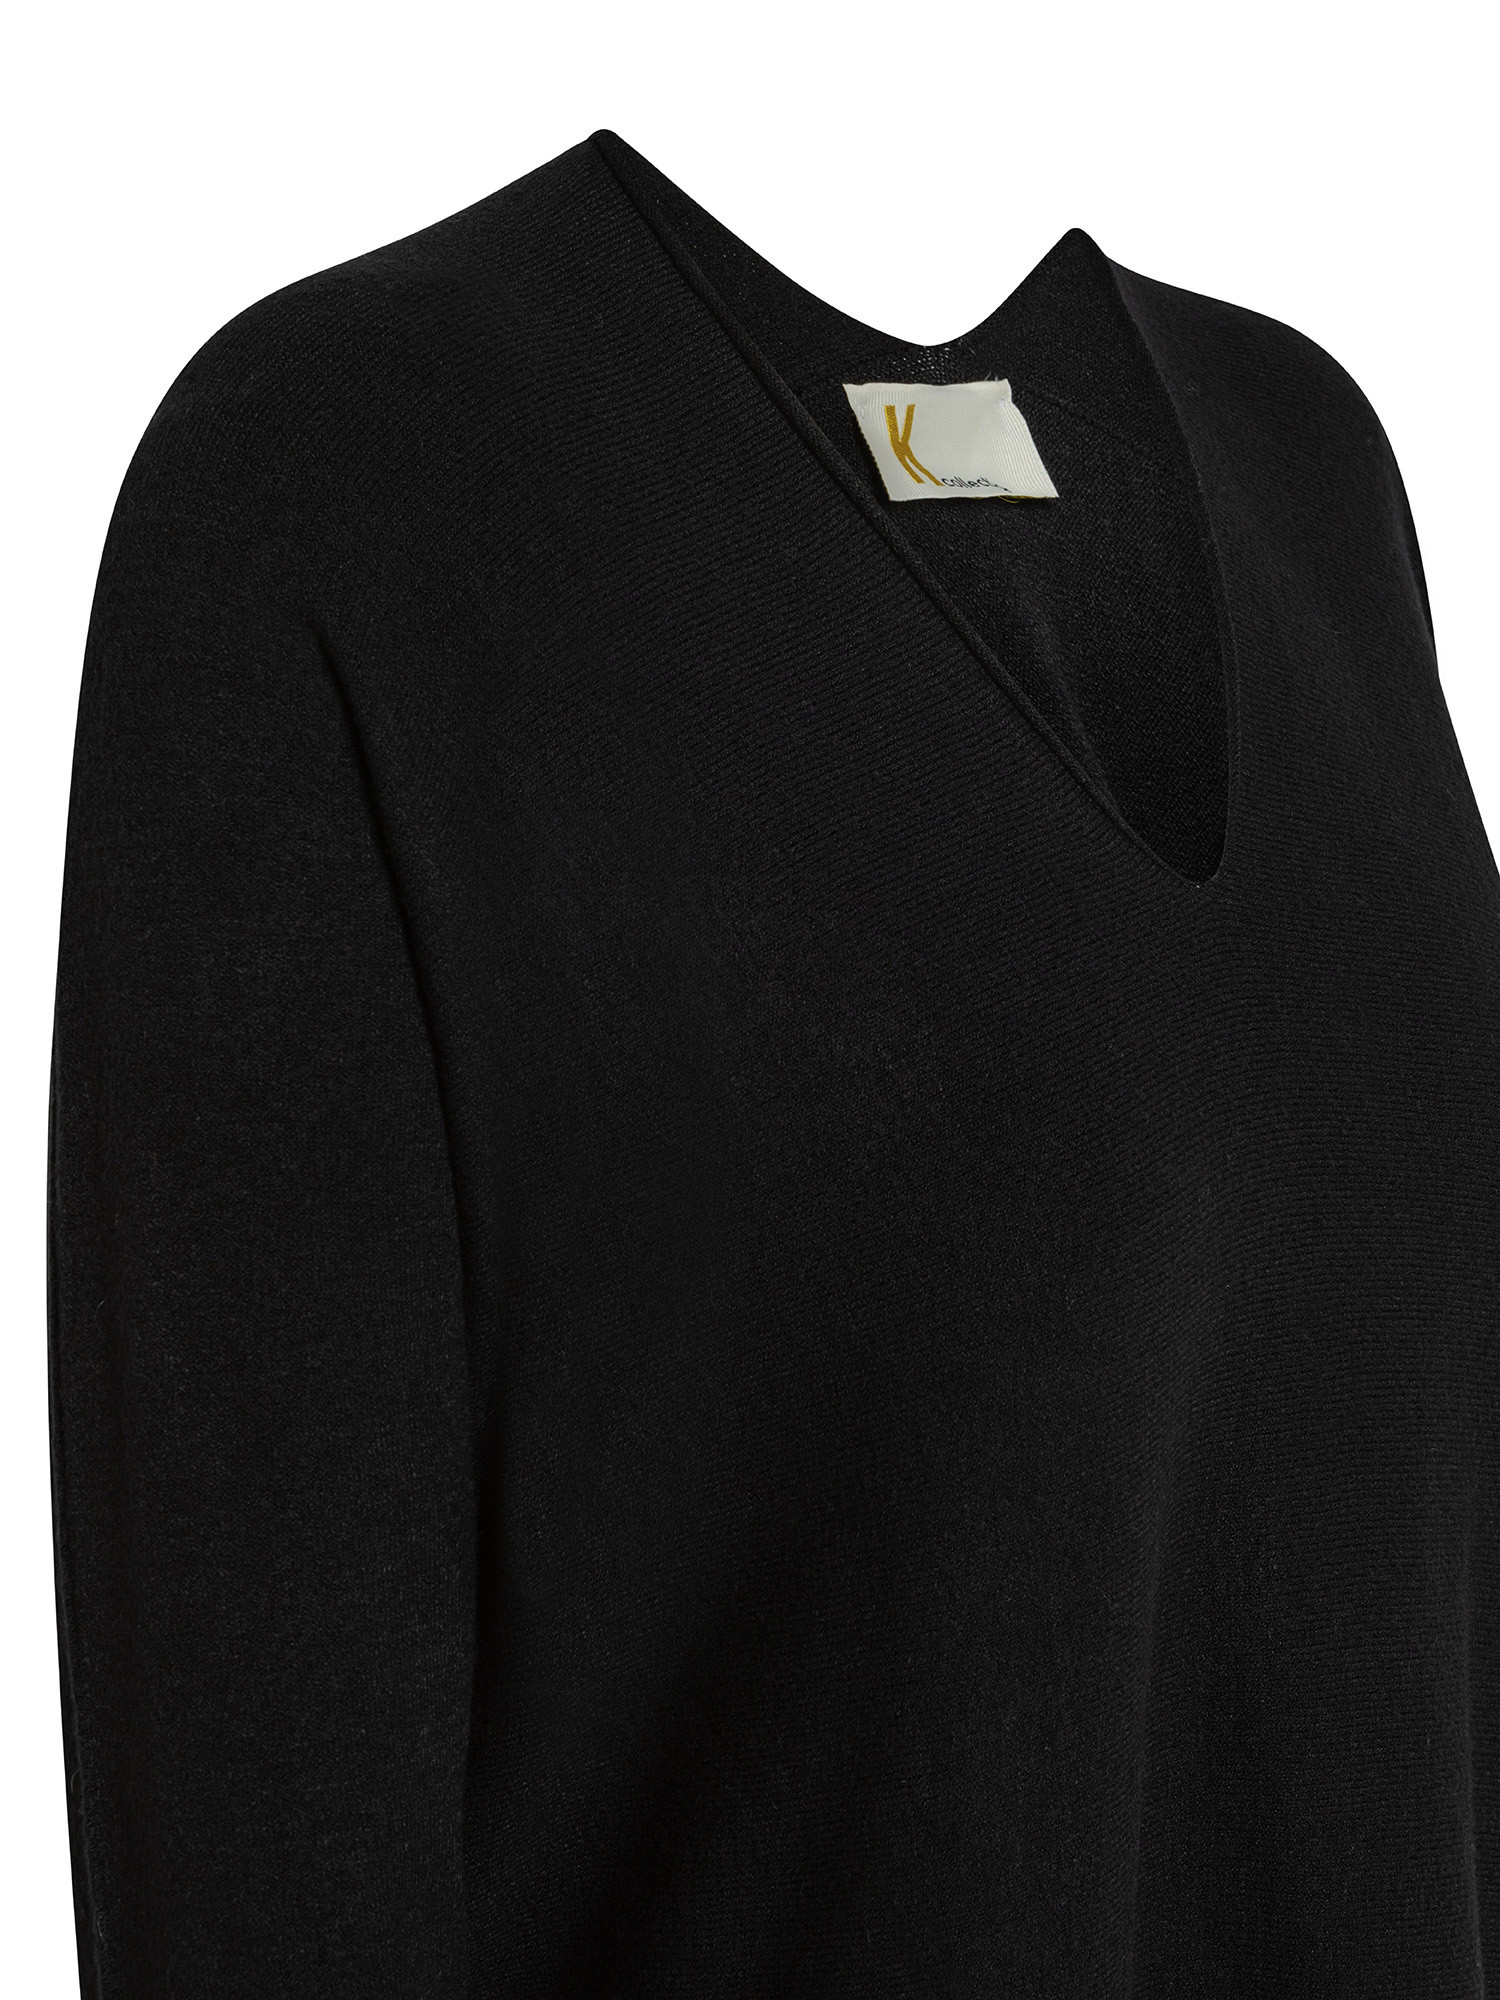 K Collection - Pullover, Black, large image number 2